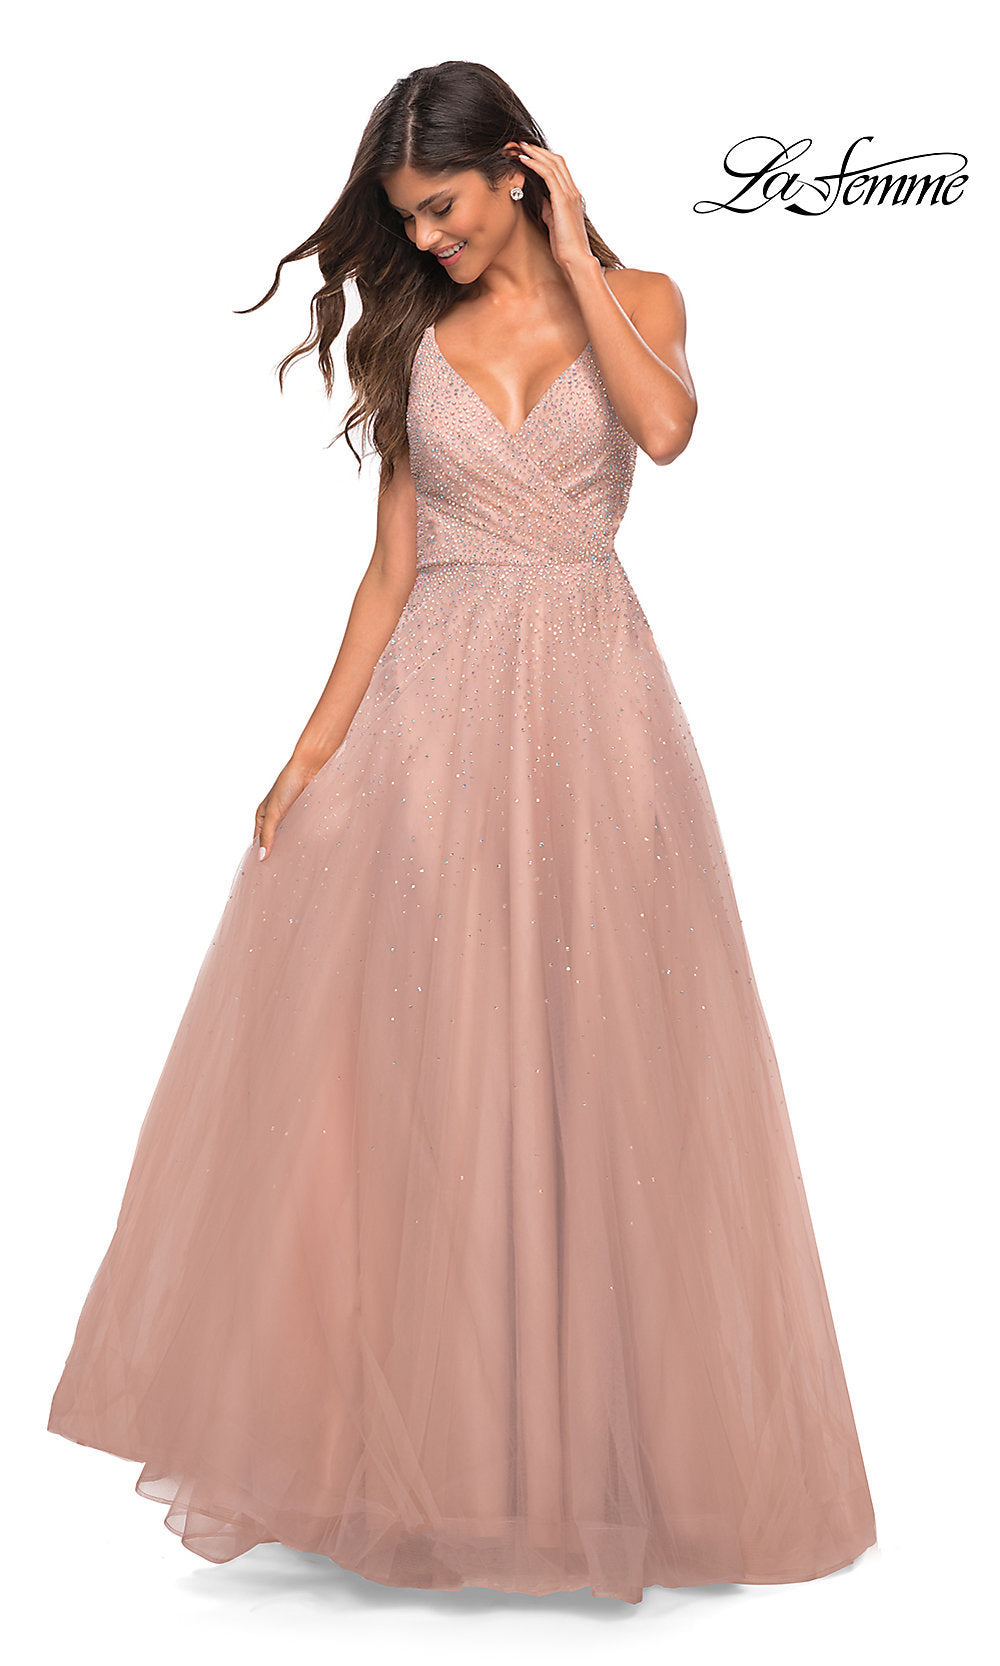  La Femme A-Line Long Beaded Mauve Pink Prom Dress